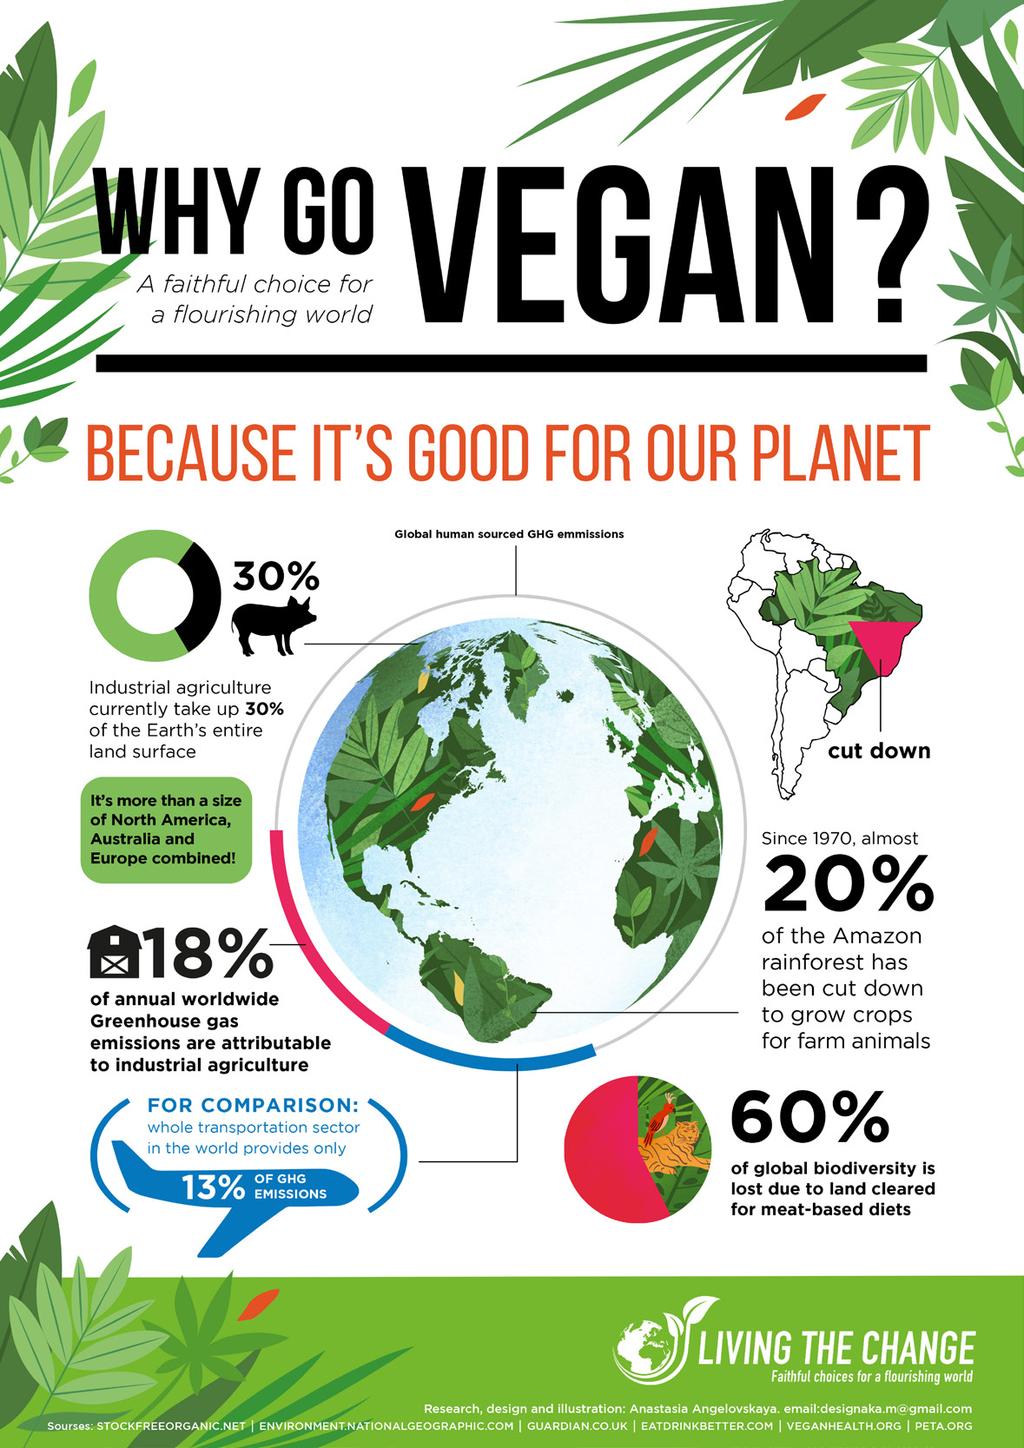 Why go vegan?